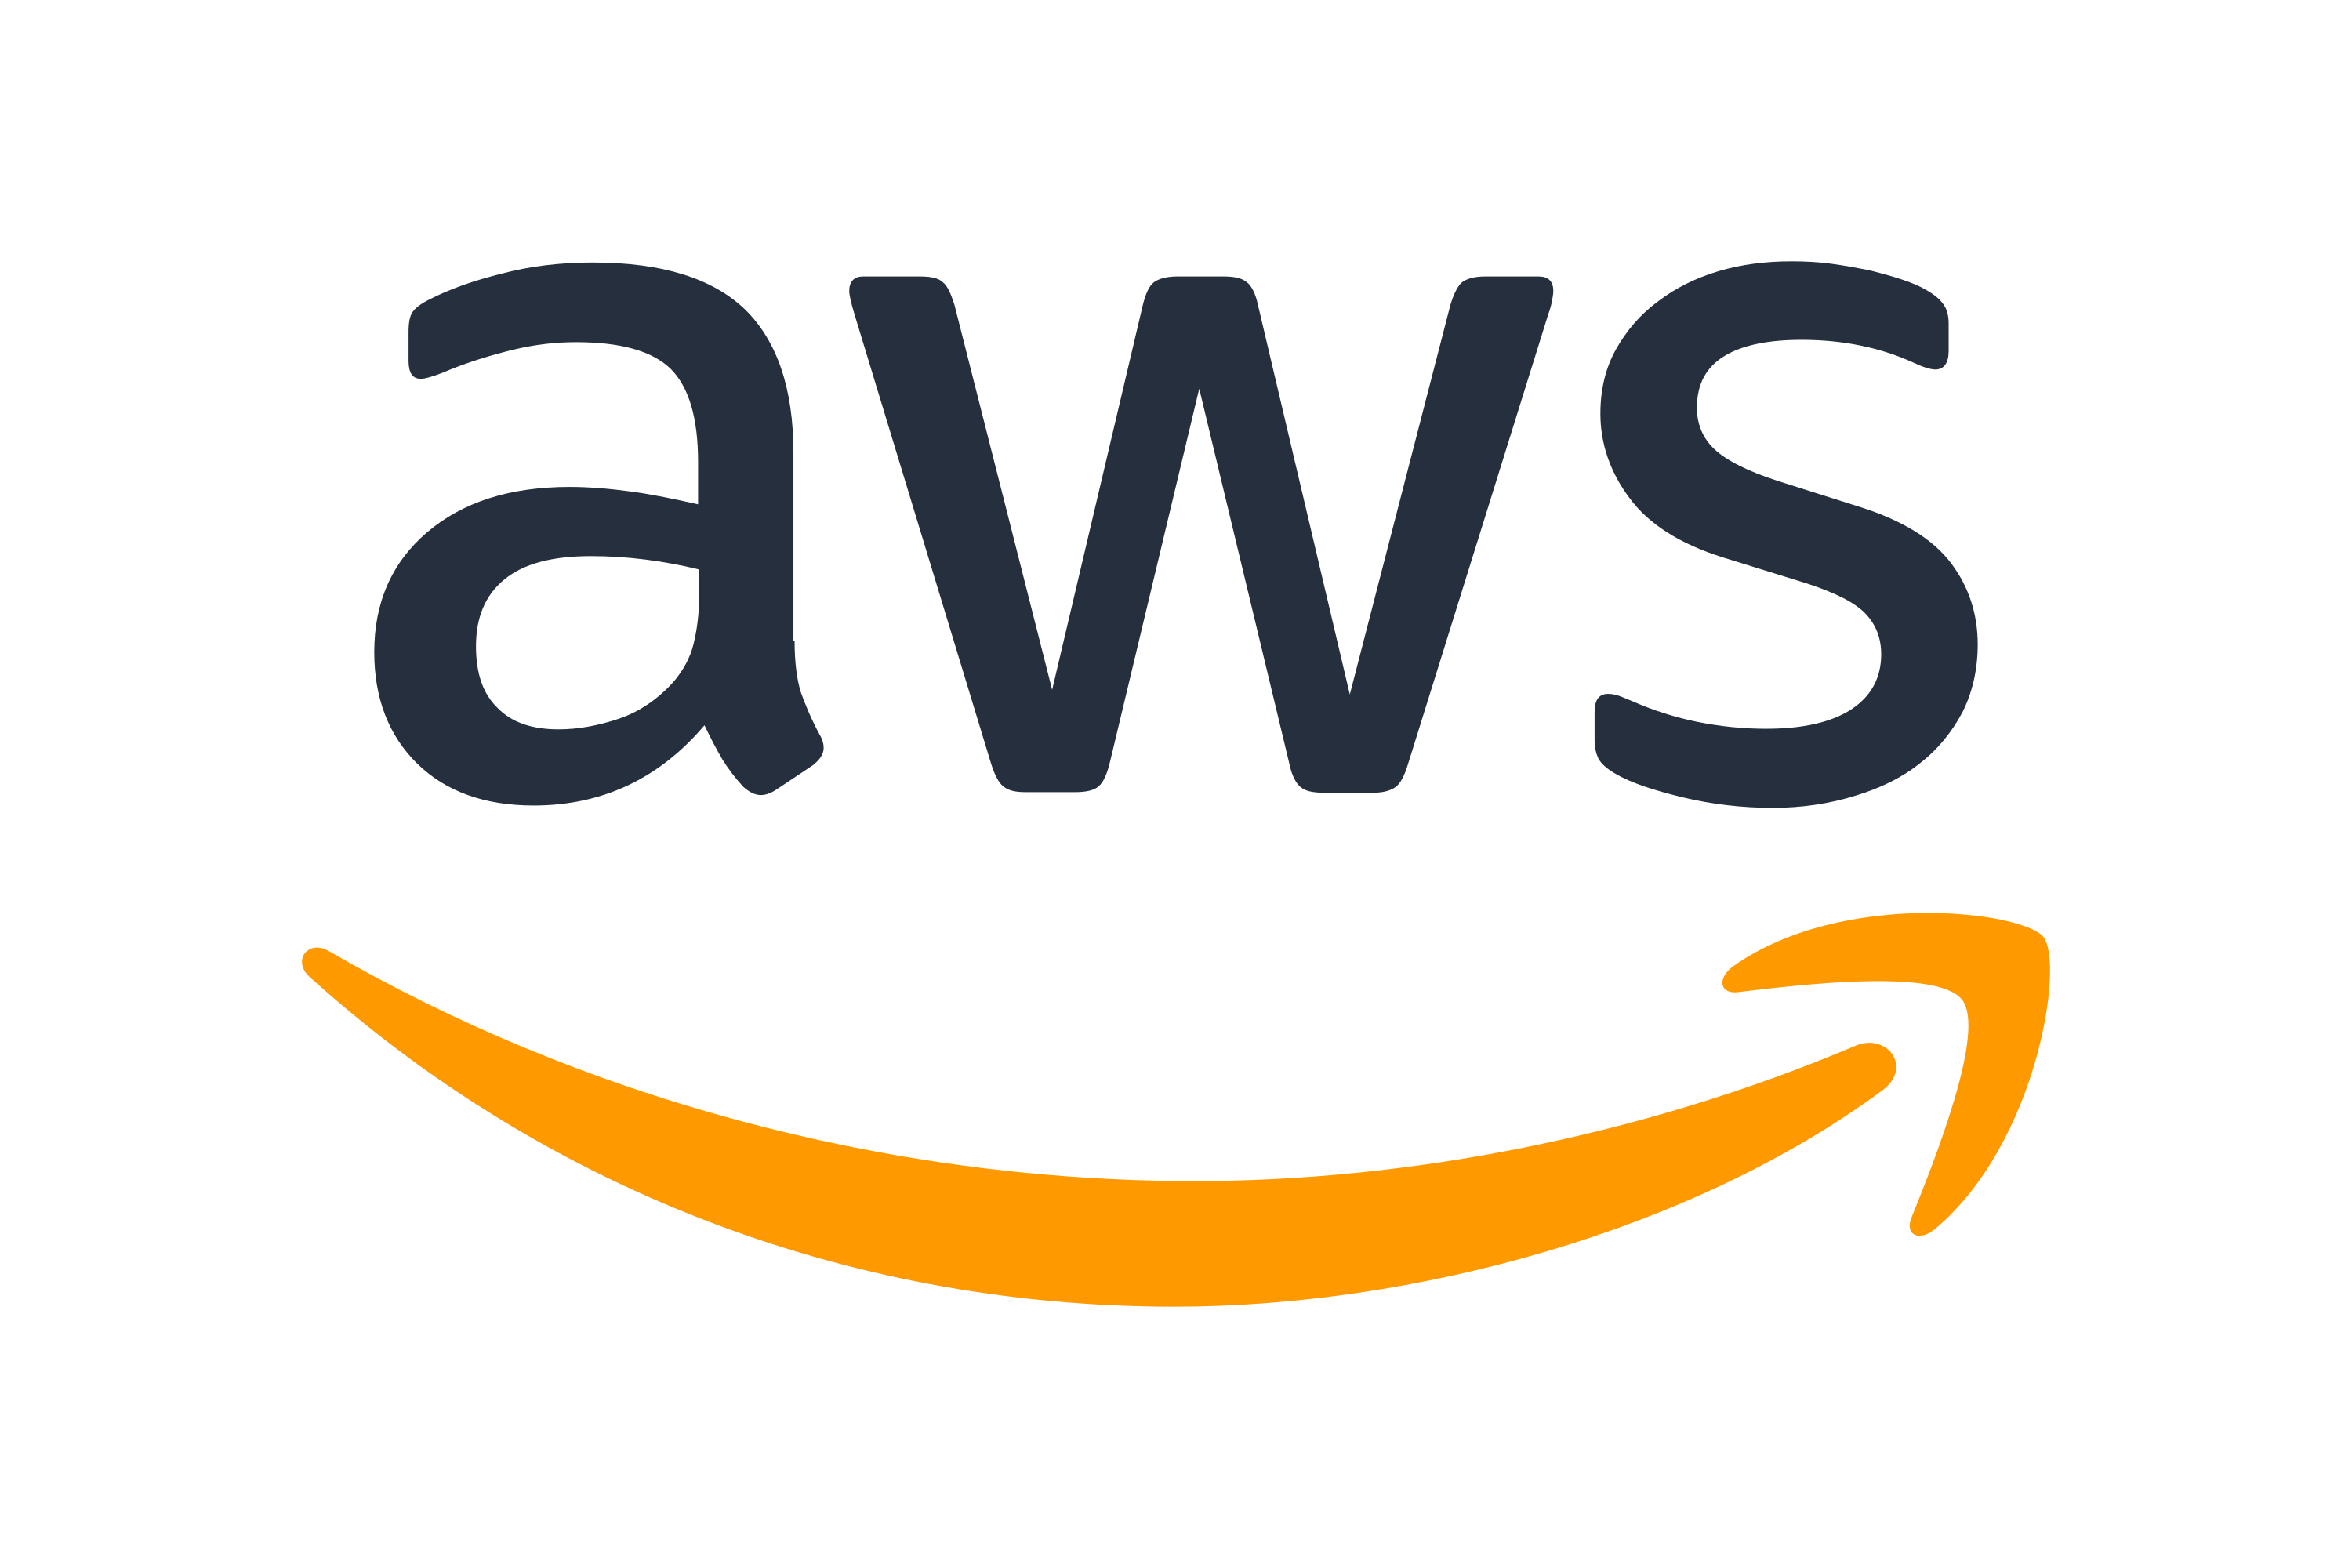 Amazon_Web_Services-Logo.wine